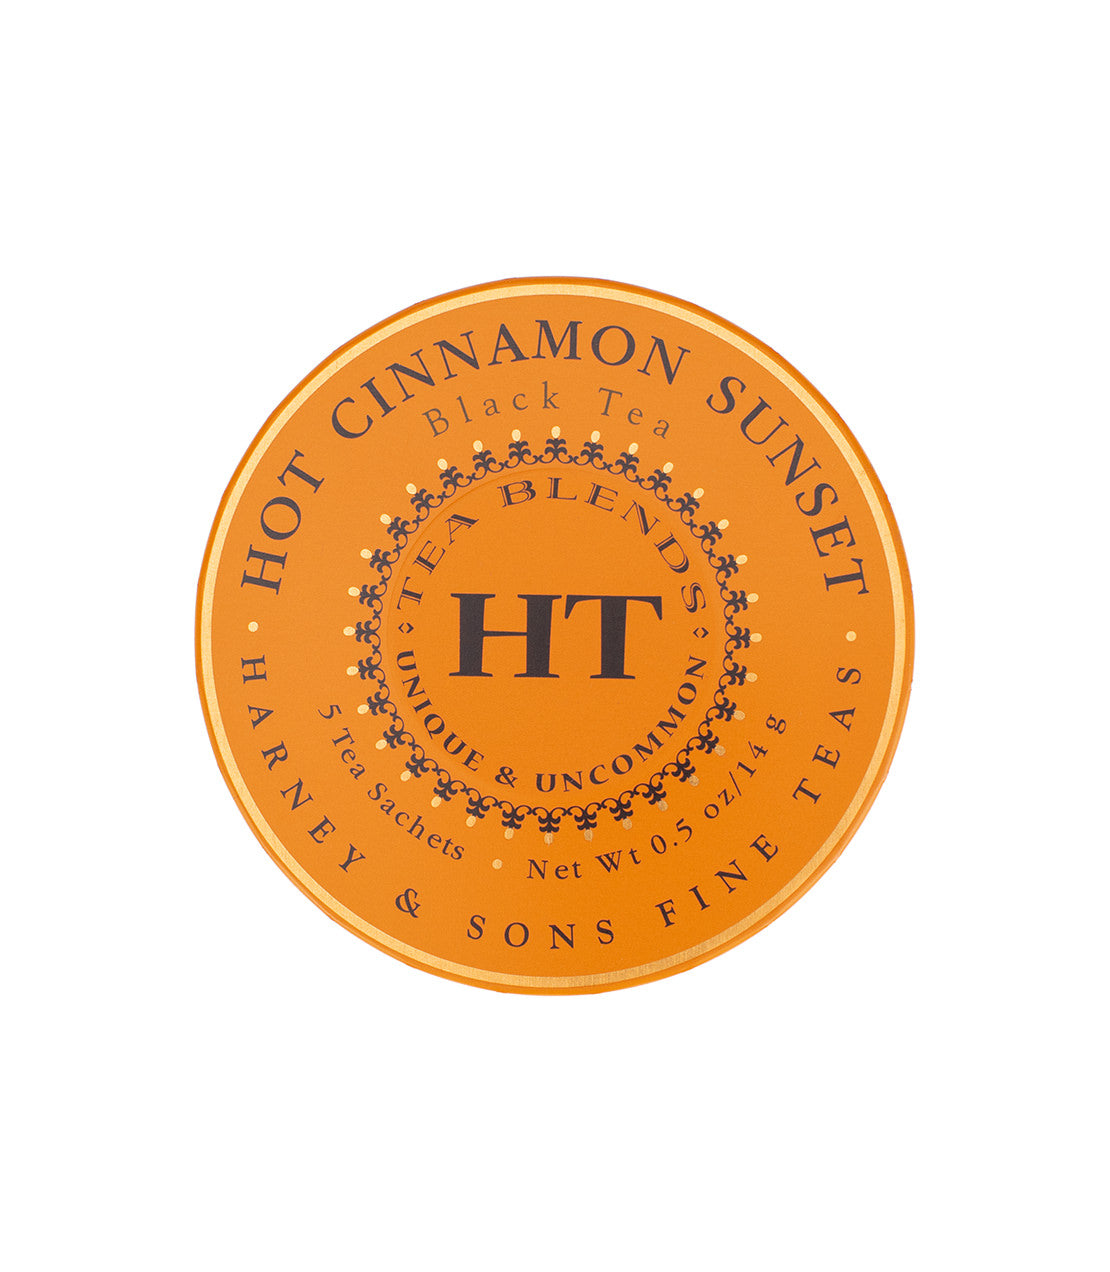 Hot Cinnamon Sunset, Tagalong Tin of 5 Sachets - Sachets Tagalong Tin of 5 Sachets - Harney & Sons Fine Teas